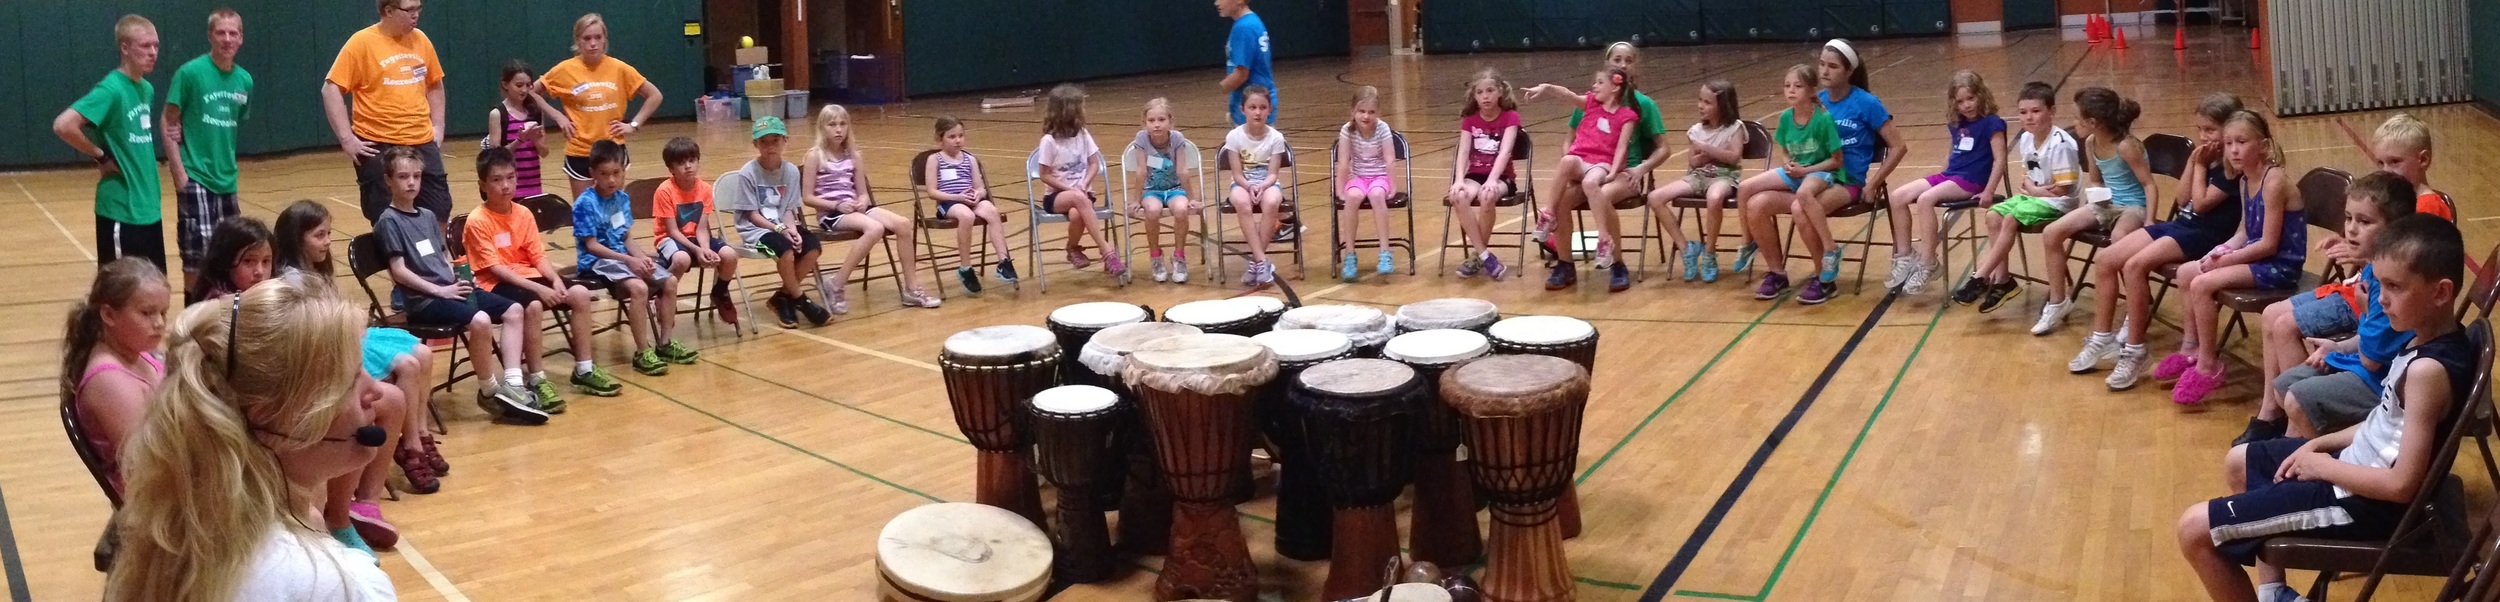 Fay Recreation Dept Drum Program.jpg